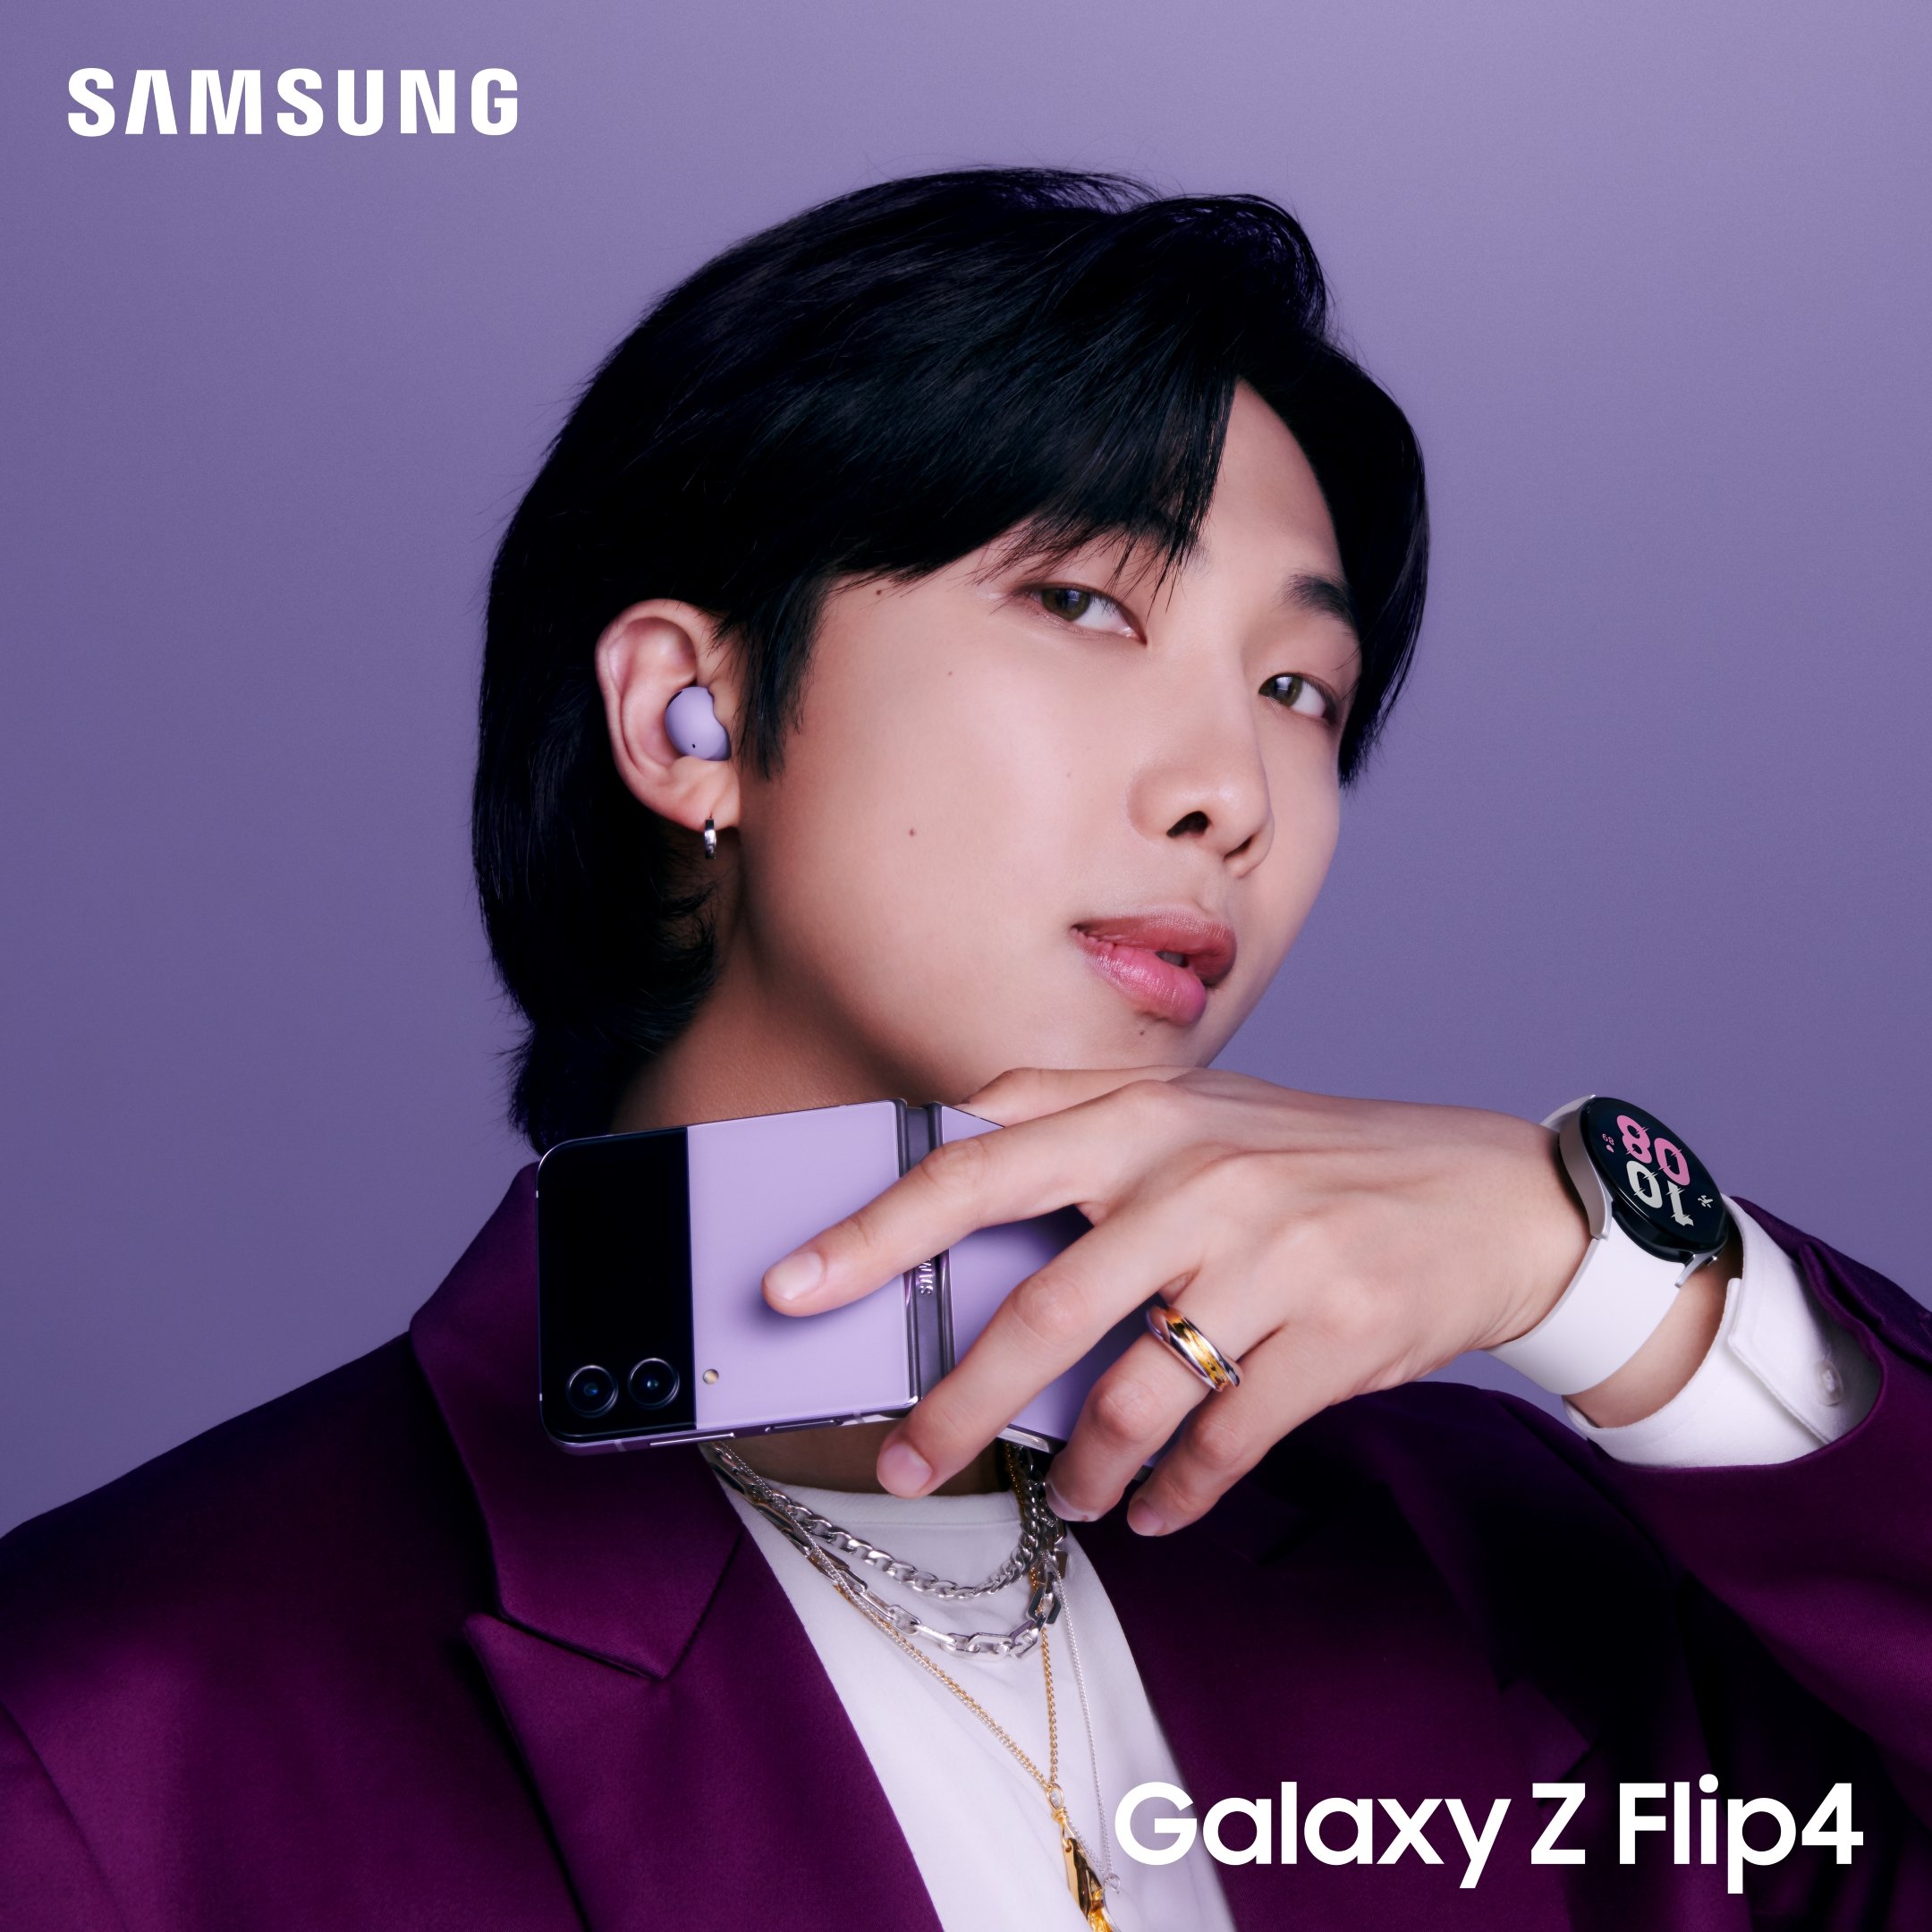 Were BTS good brand ambassadors for Samsung? - Quora